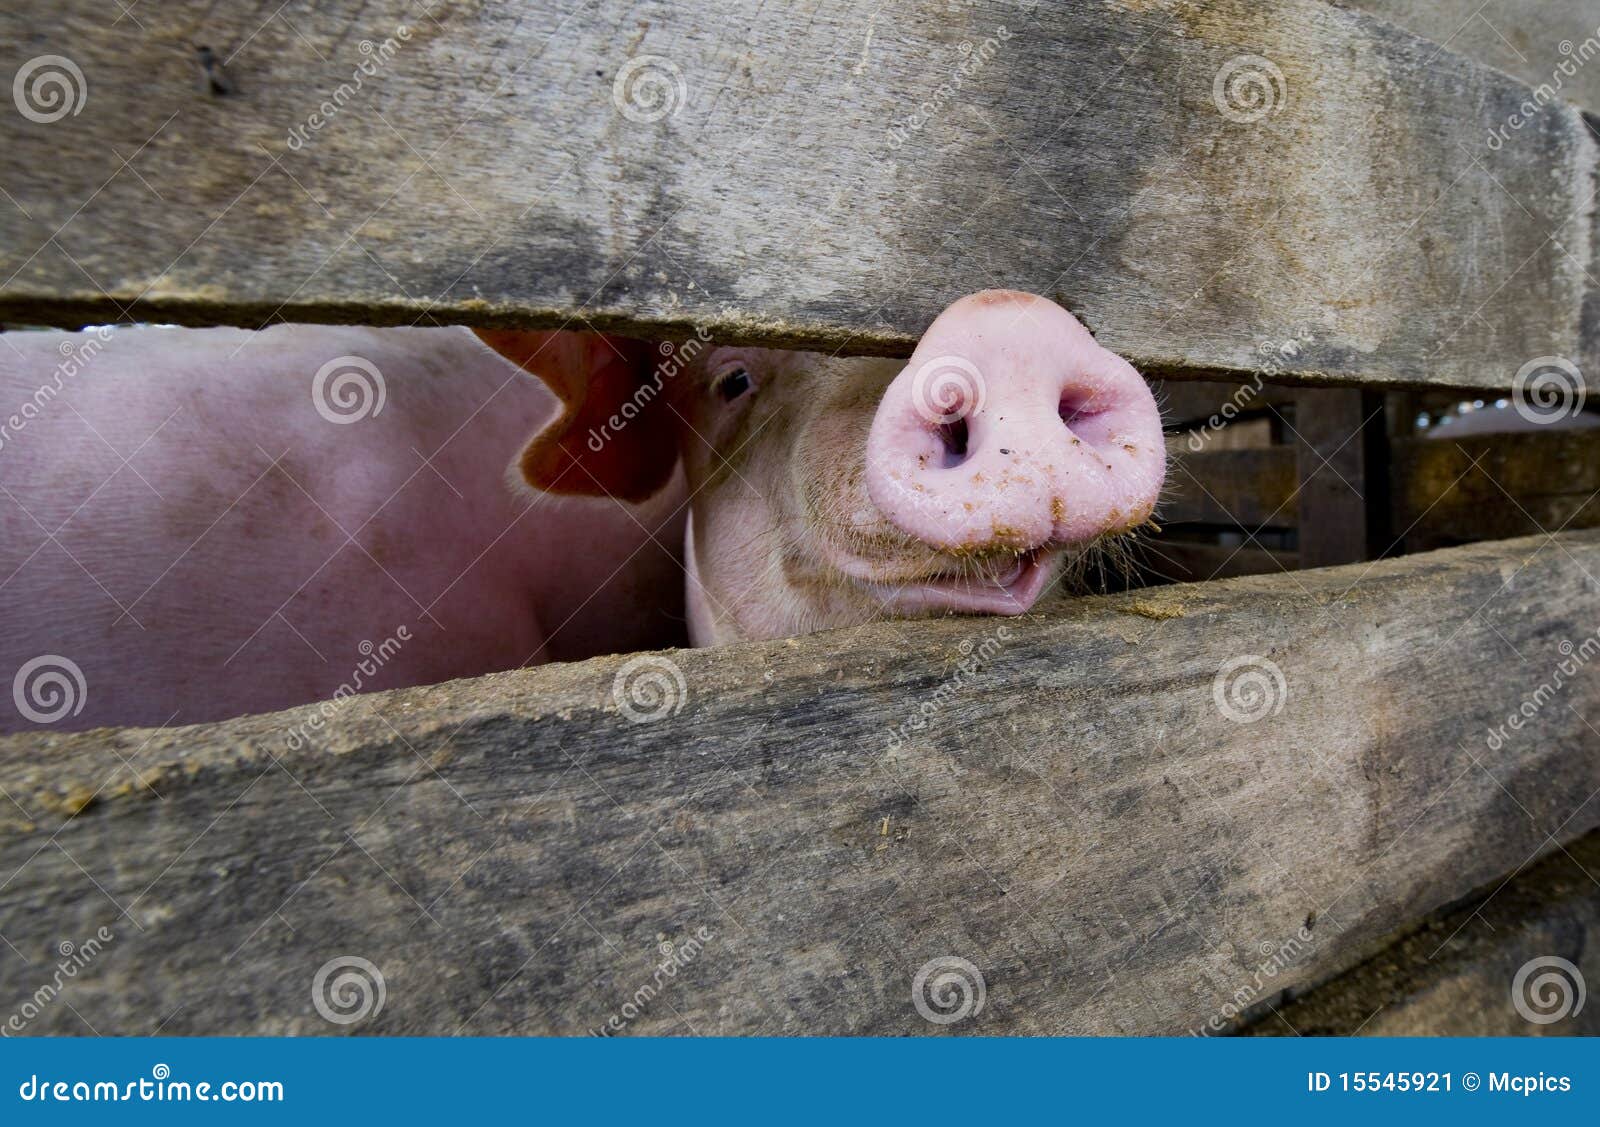 close-up of a pig snout